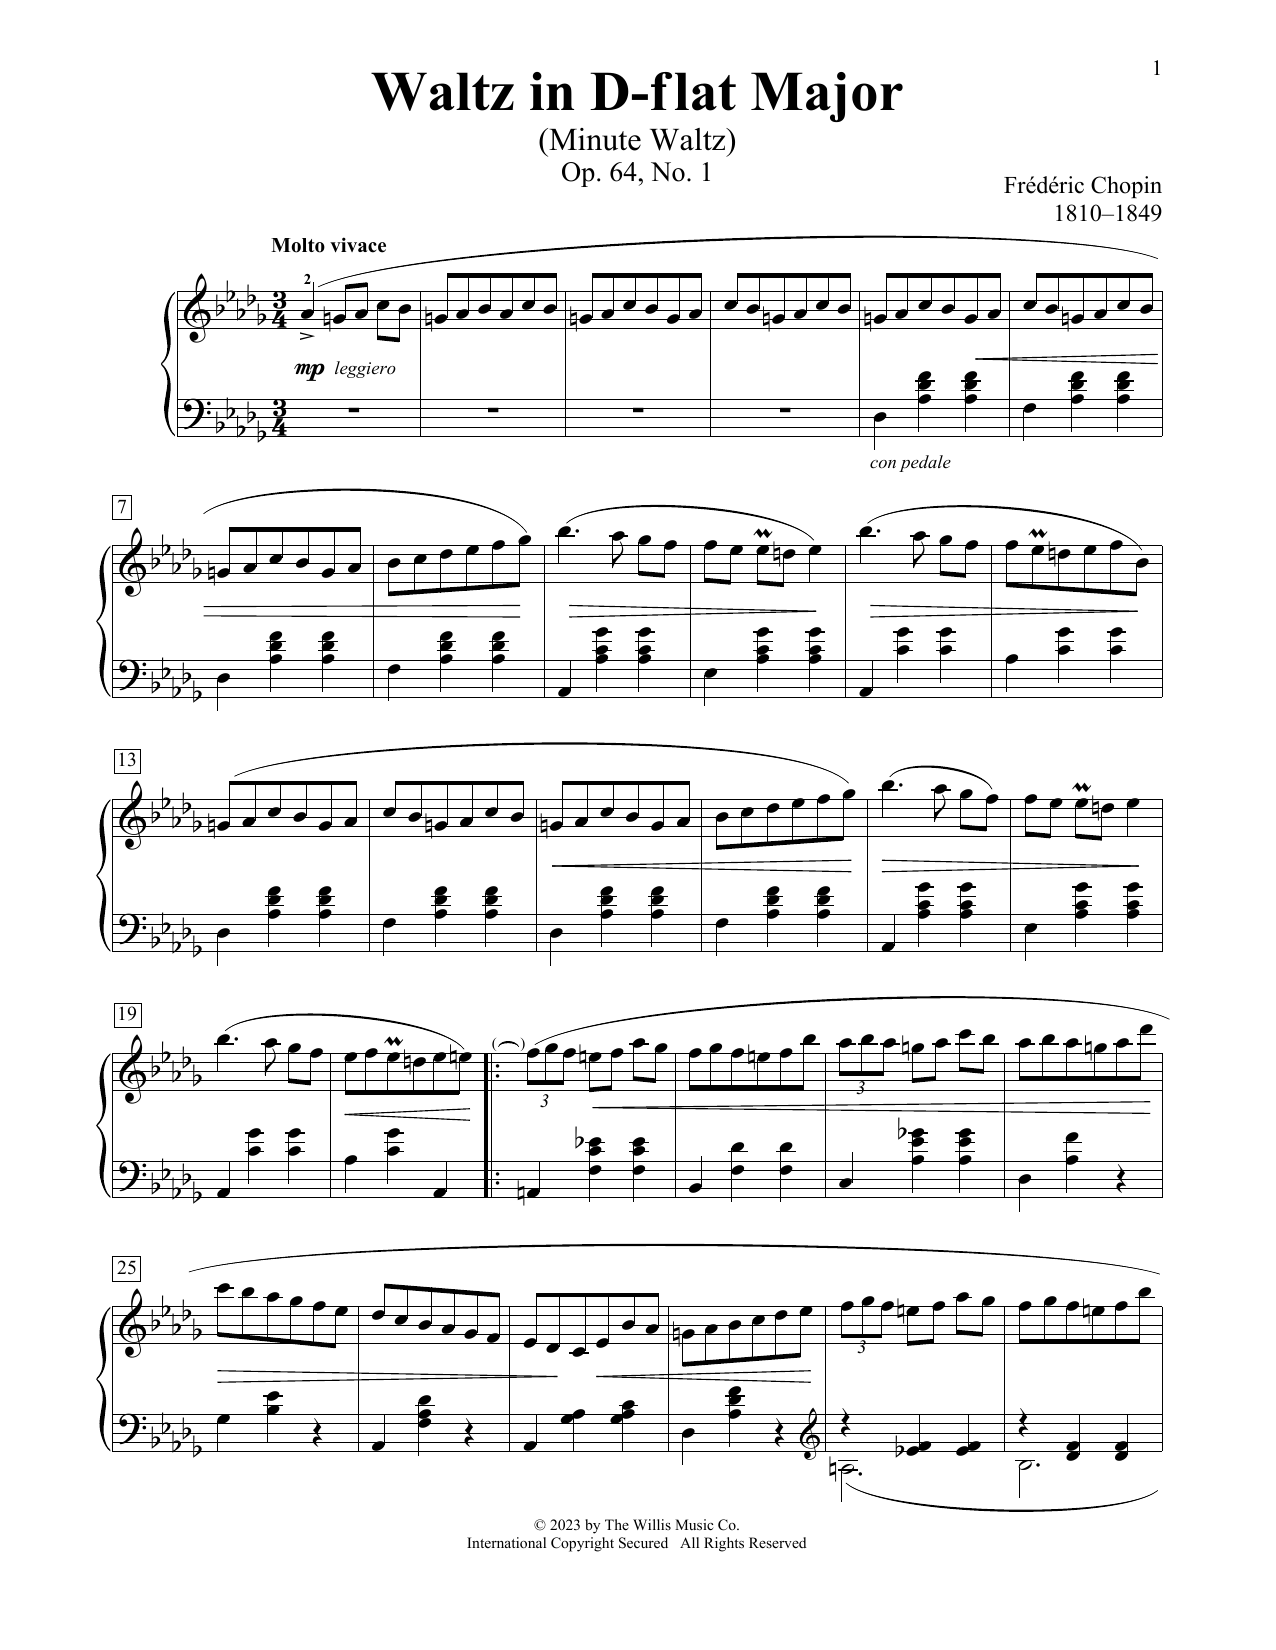 Frederic Chopin Waltz In D-Flat Major (